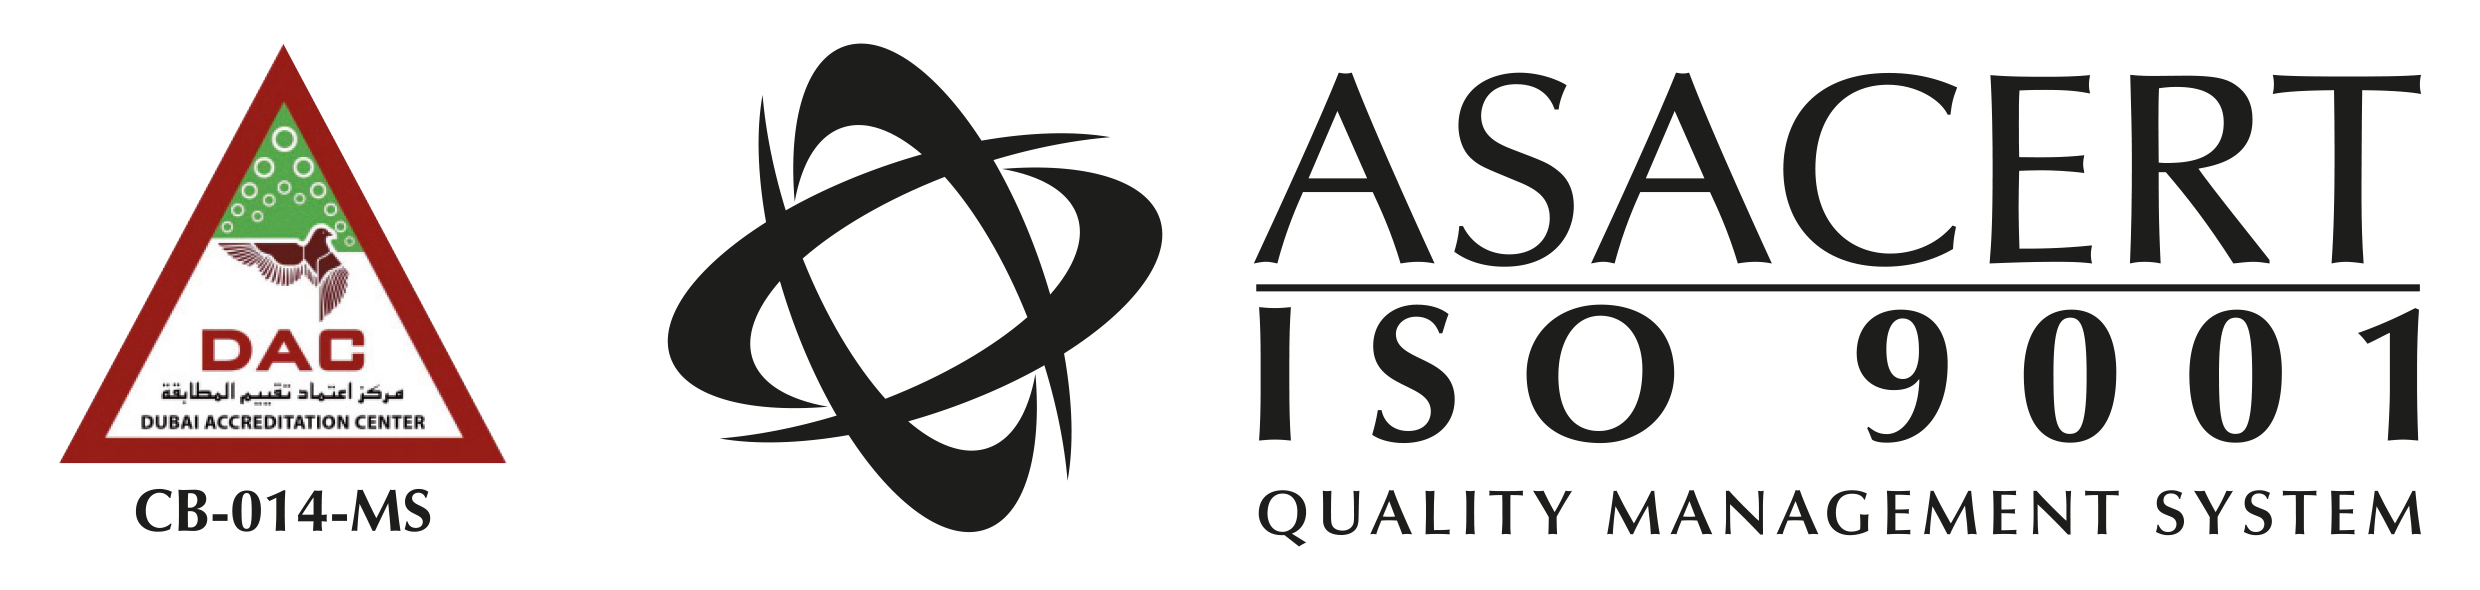 registered ISO 9001 quality management